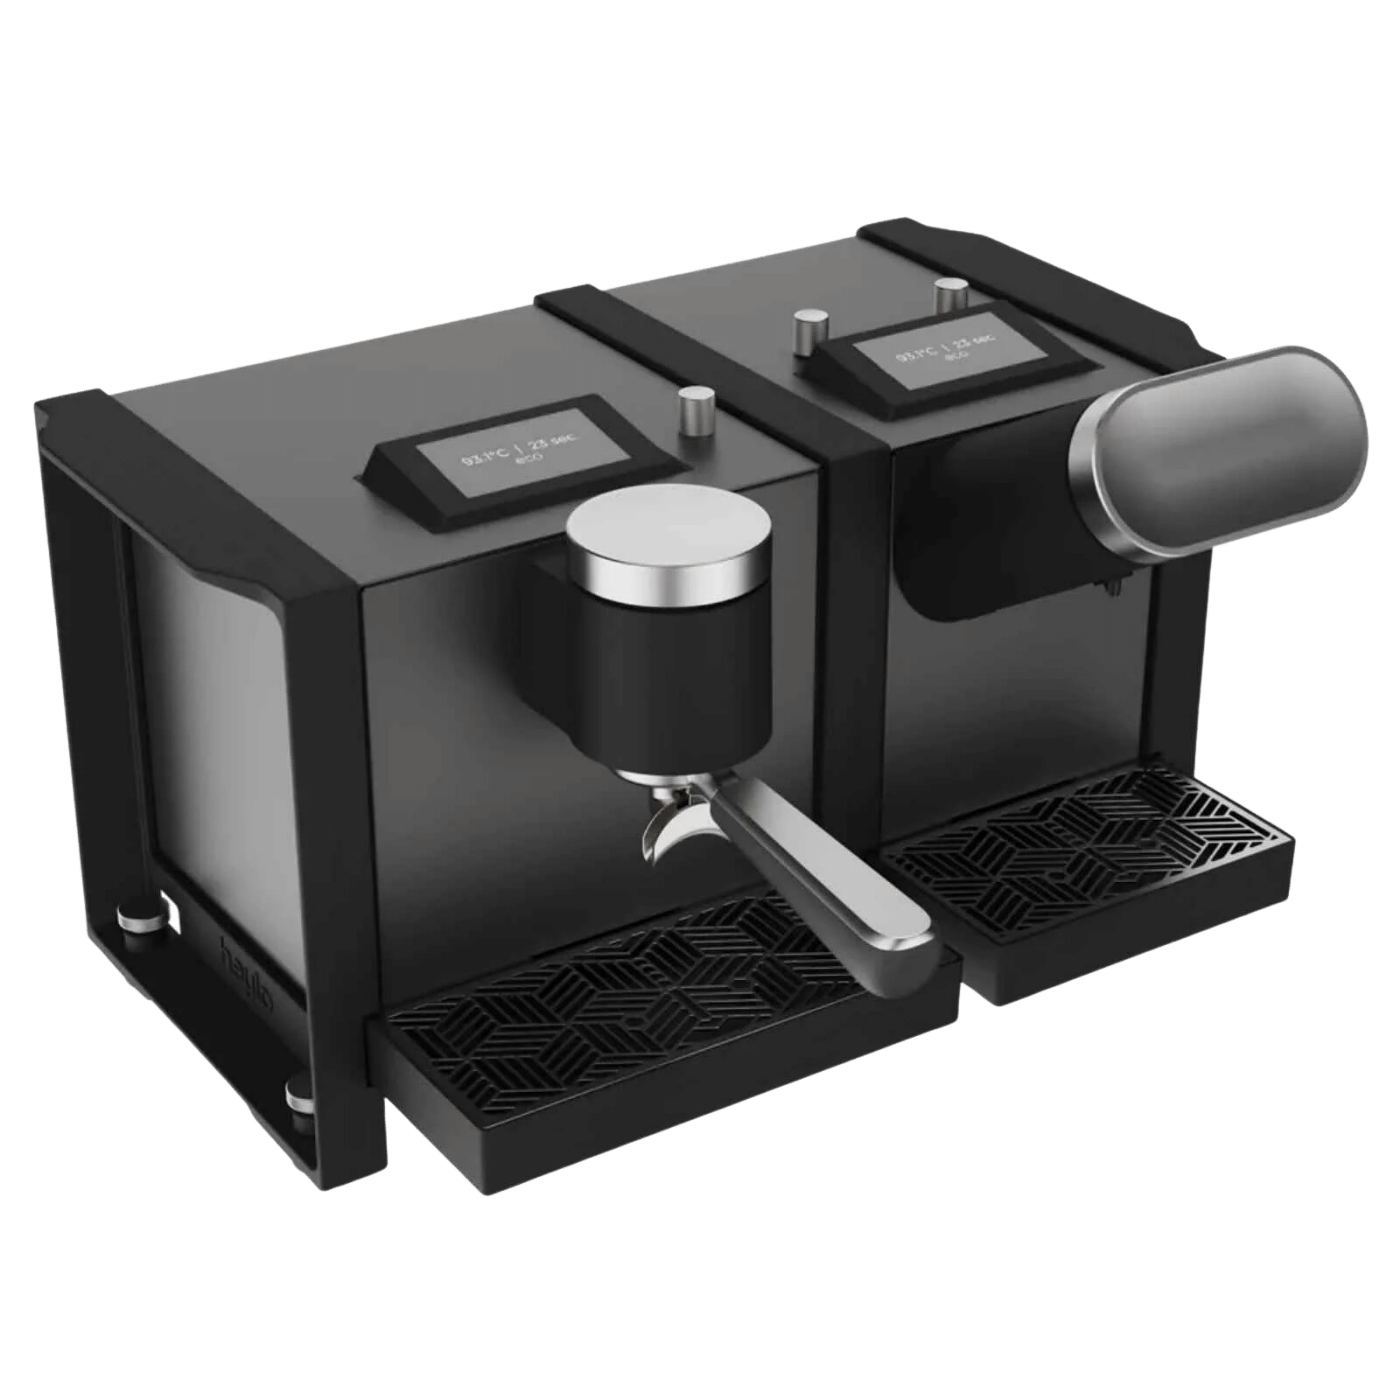 Heylo espressomodul og mælkemodul, kedelfri espressomaskine og mælkeskummer 